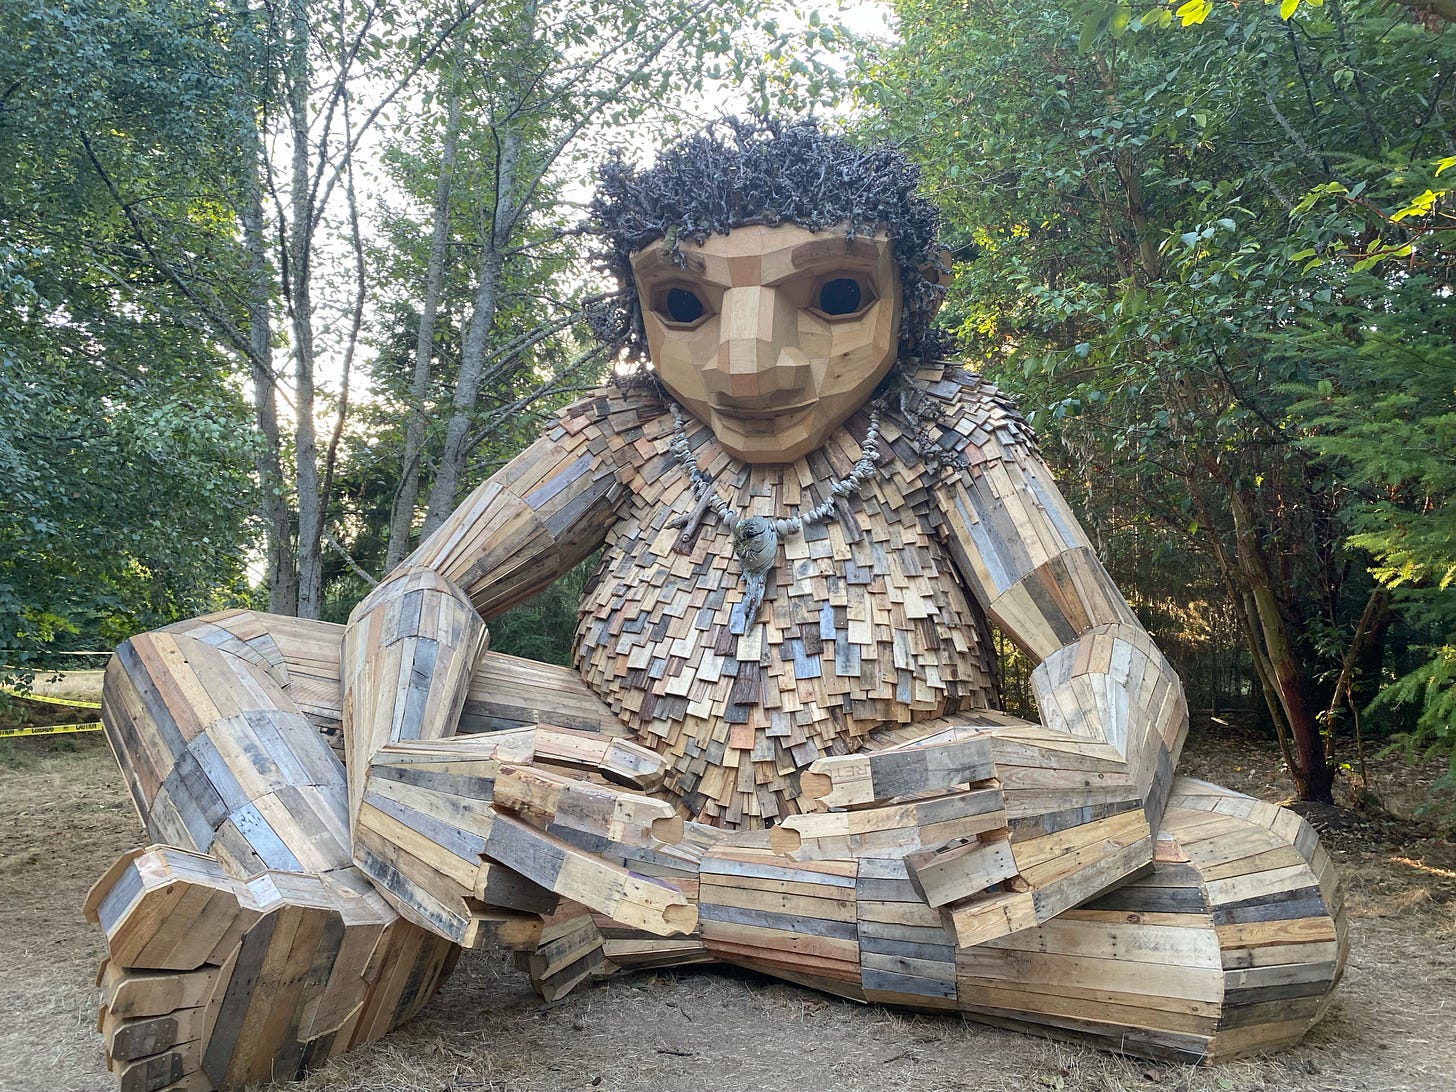 Pia the Peacekeeper is an 18 foot tall, wooden sculpture of a troll in Sakai Park on Bainbridge Island in Washington State.